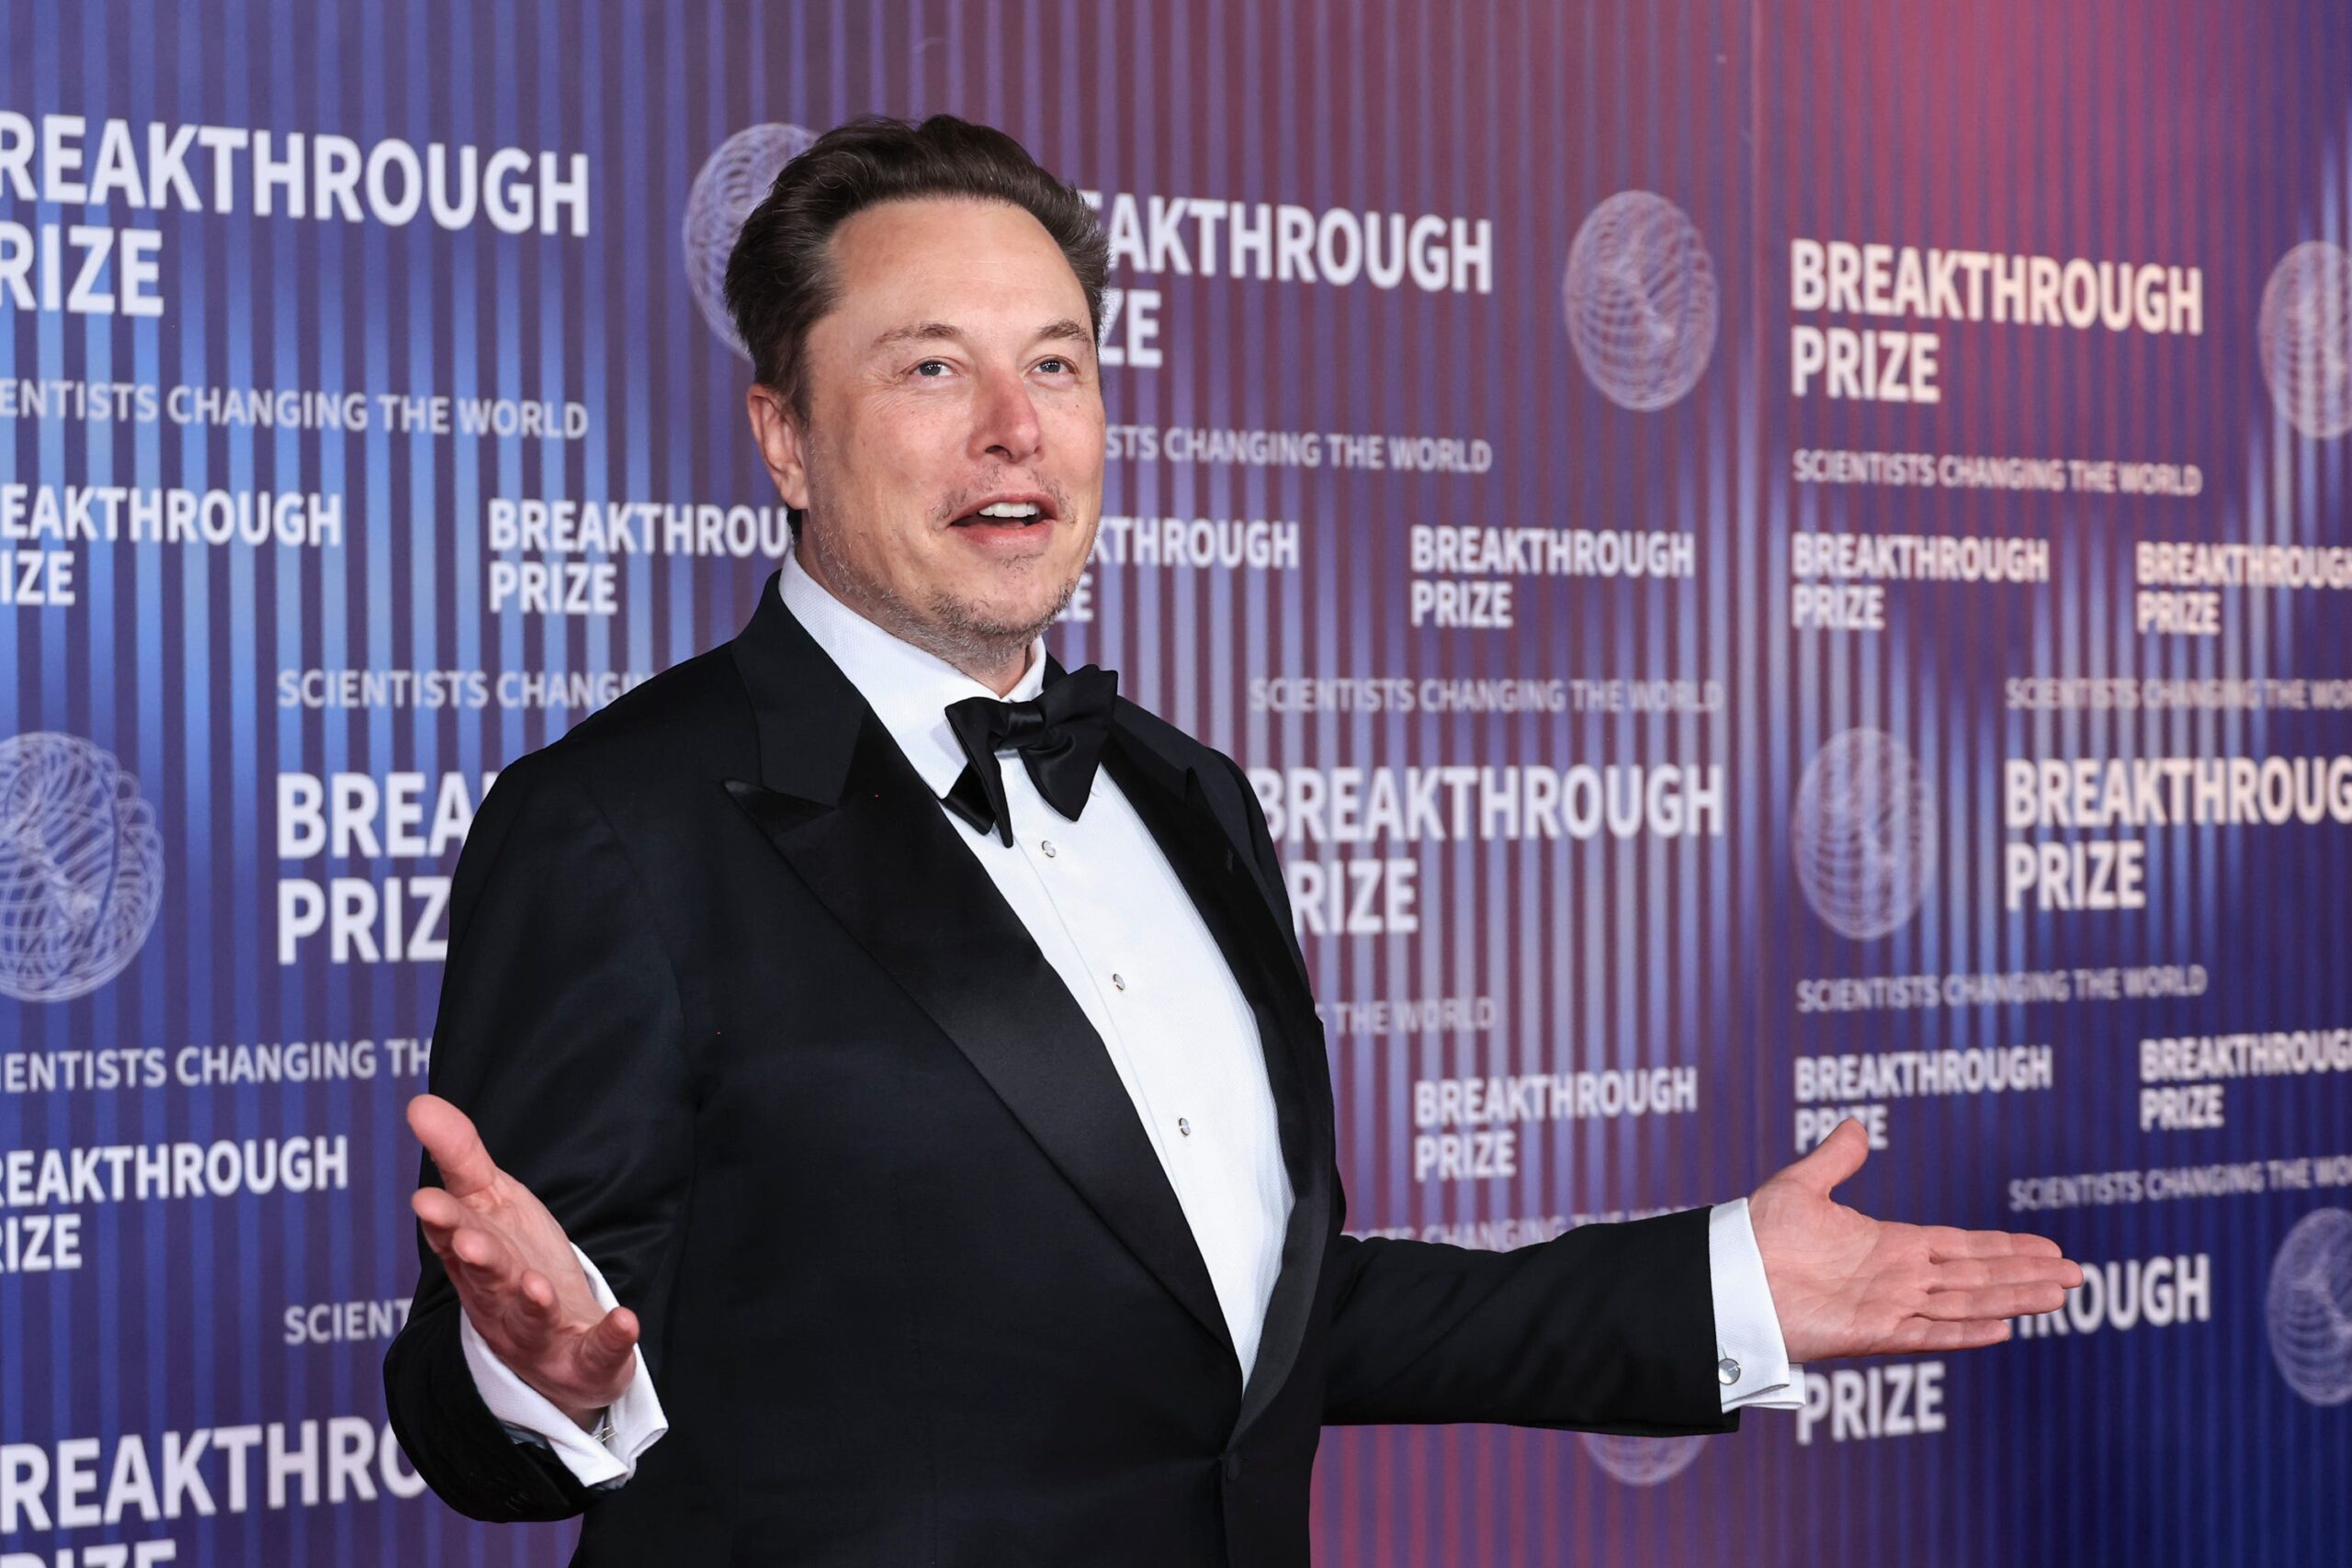 Real-Life Drama at Tesla: Elon Musk's Job Cuts Stir 'Squid Game' Fears Among Employees